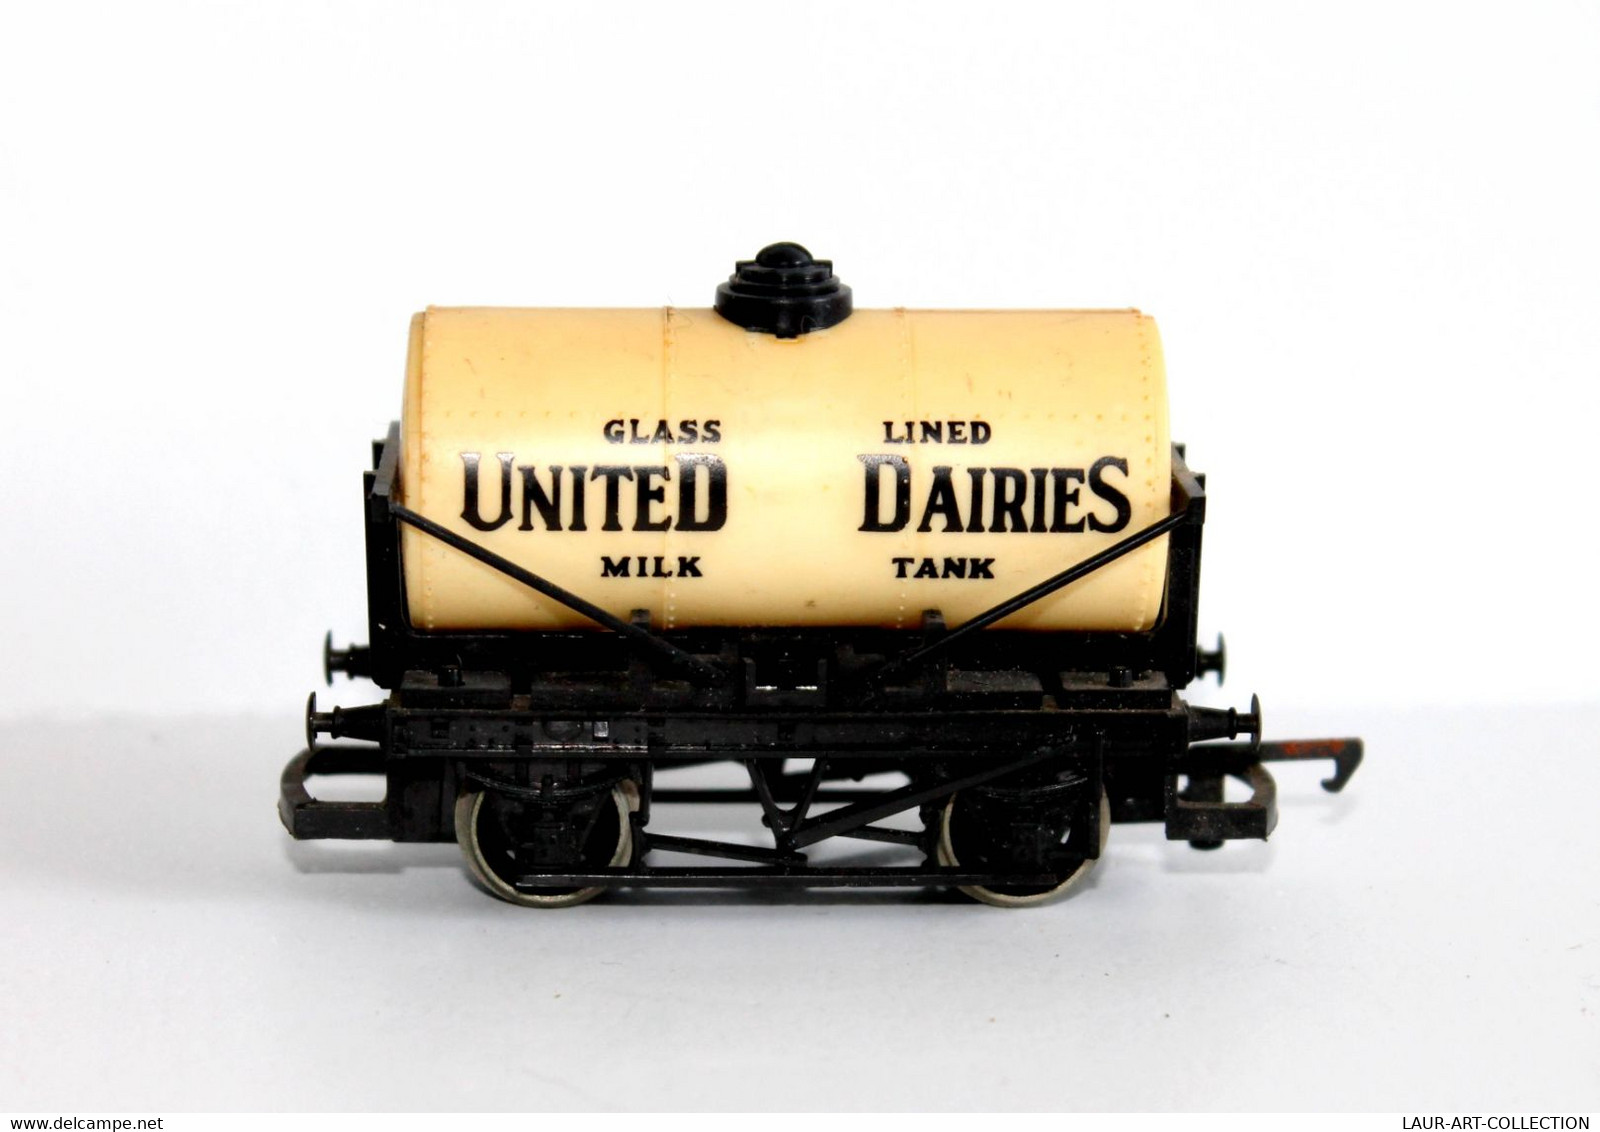 HORNBY RAILWAYS - WAGON CITERNE MARCHANDISE GLASS UNITED MILK LINED DAIRIES TANK / TRAIN CHEMIN DE FER     (2304.84) - Wagons Marchandises